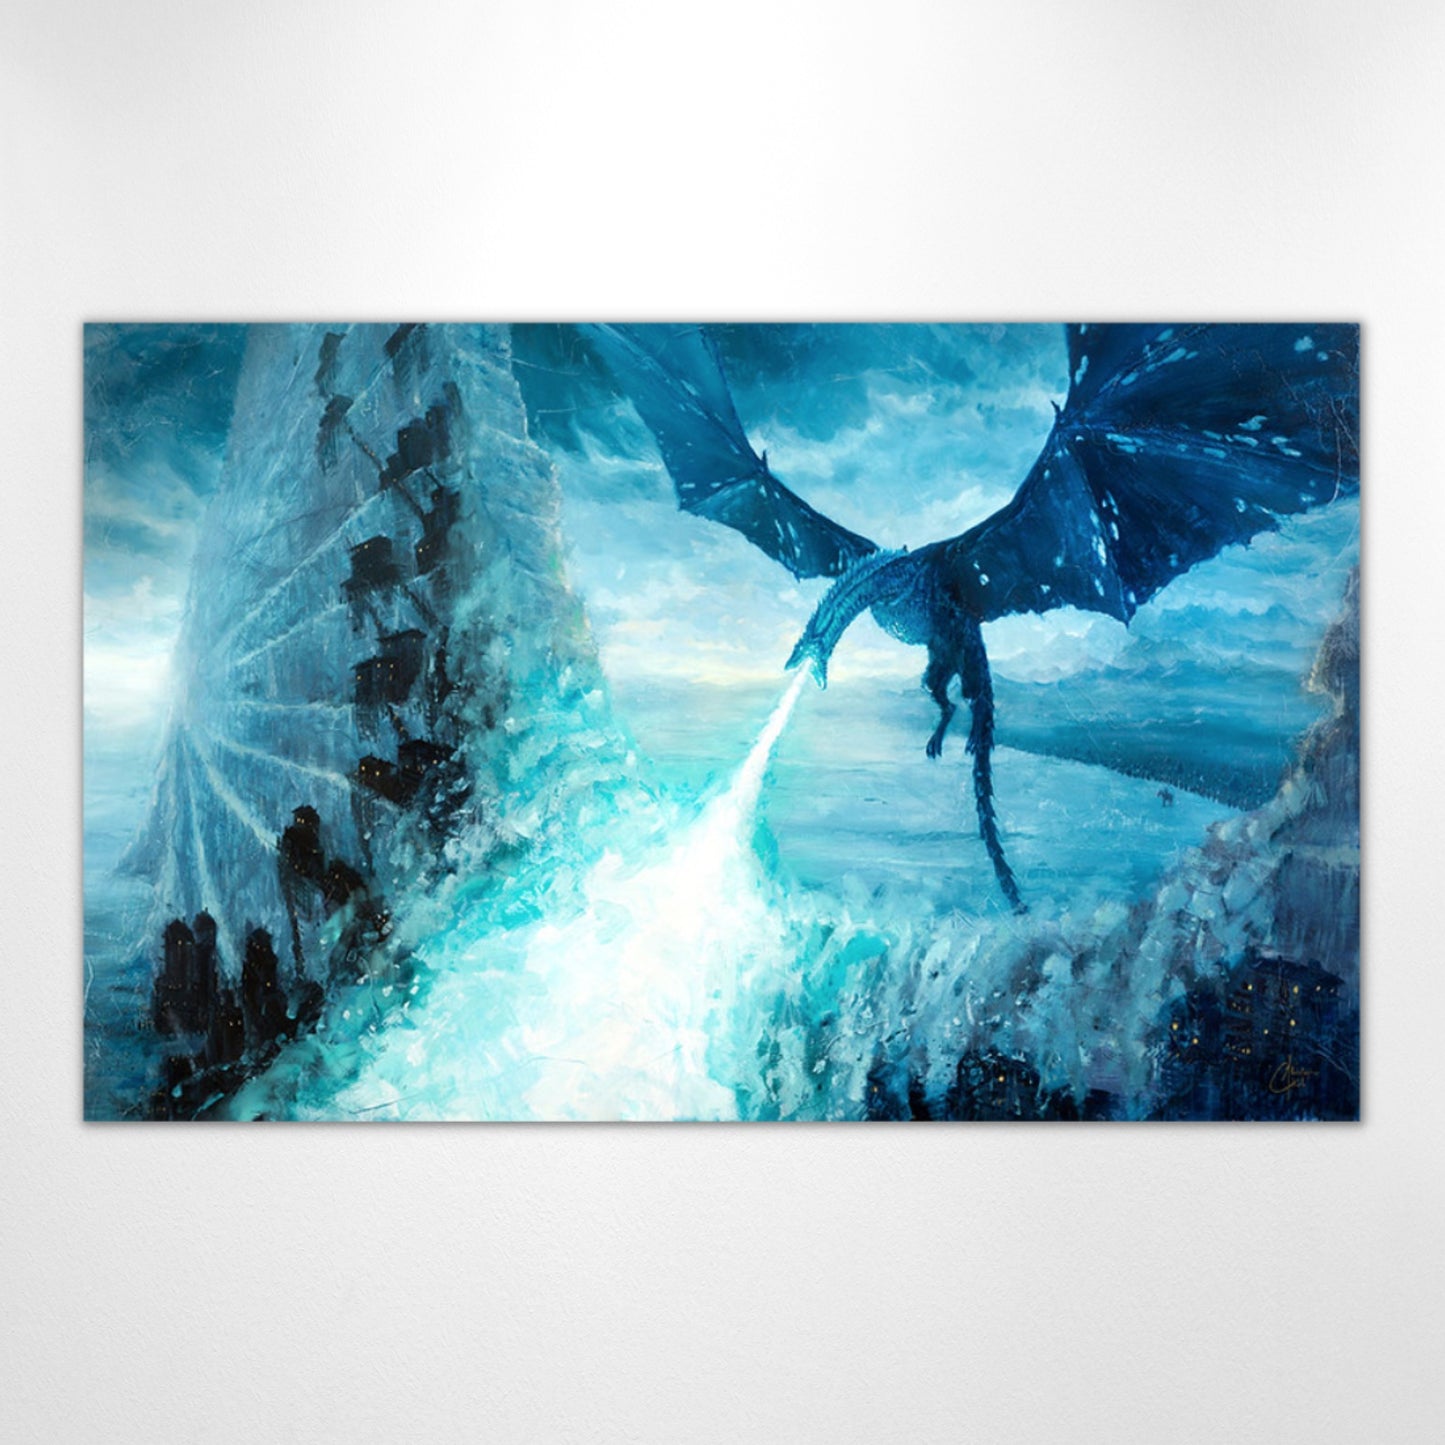 Viserion "The Ice Dragon" Game of Thrones Premium Art Print